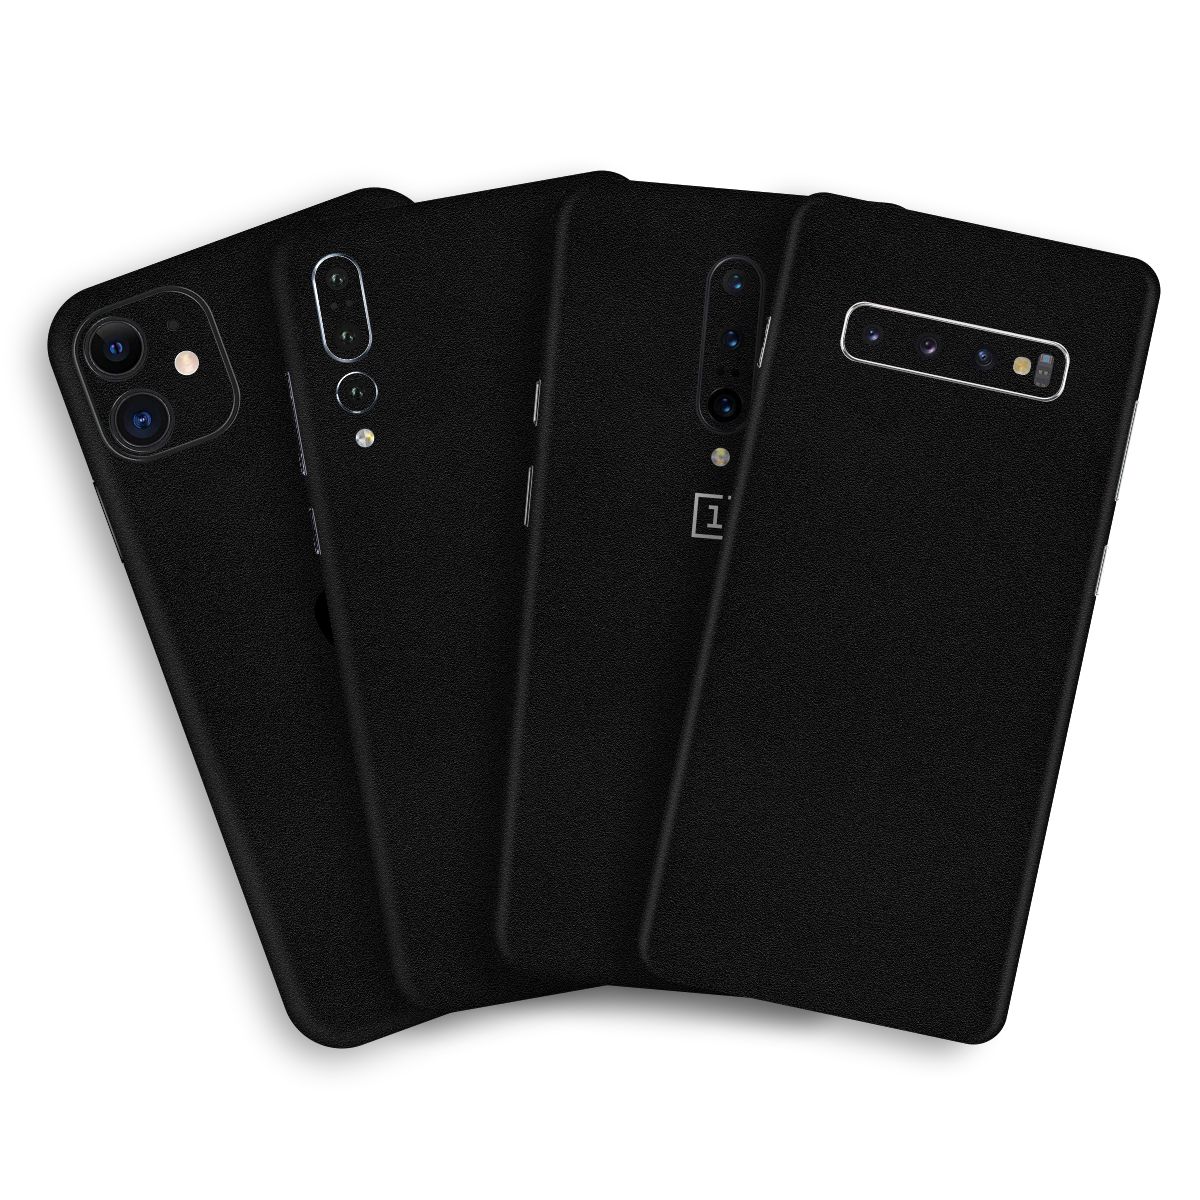 Matte Black Mobile Skin / Mobile Wrap for Samsung Galaxy S7 Edge